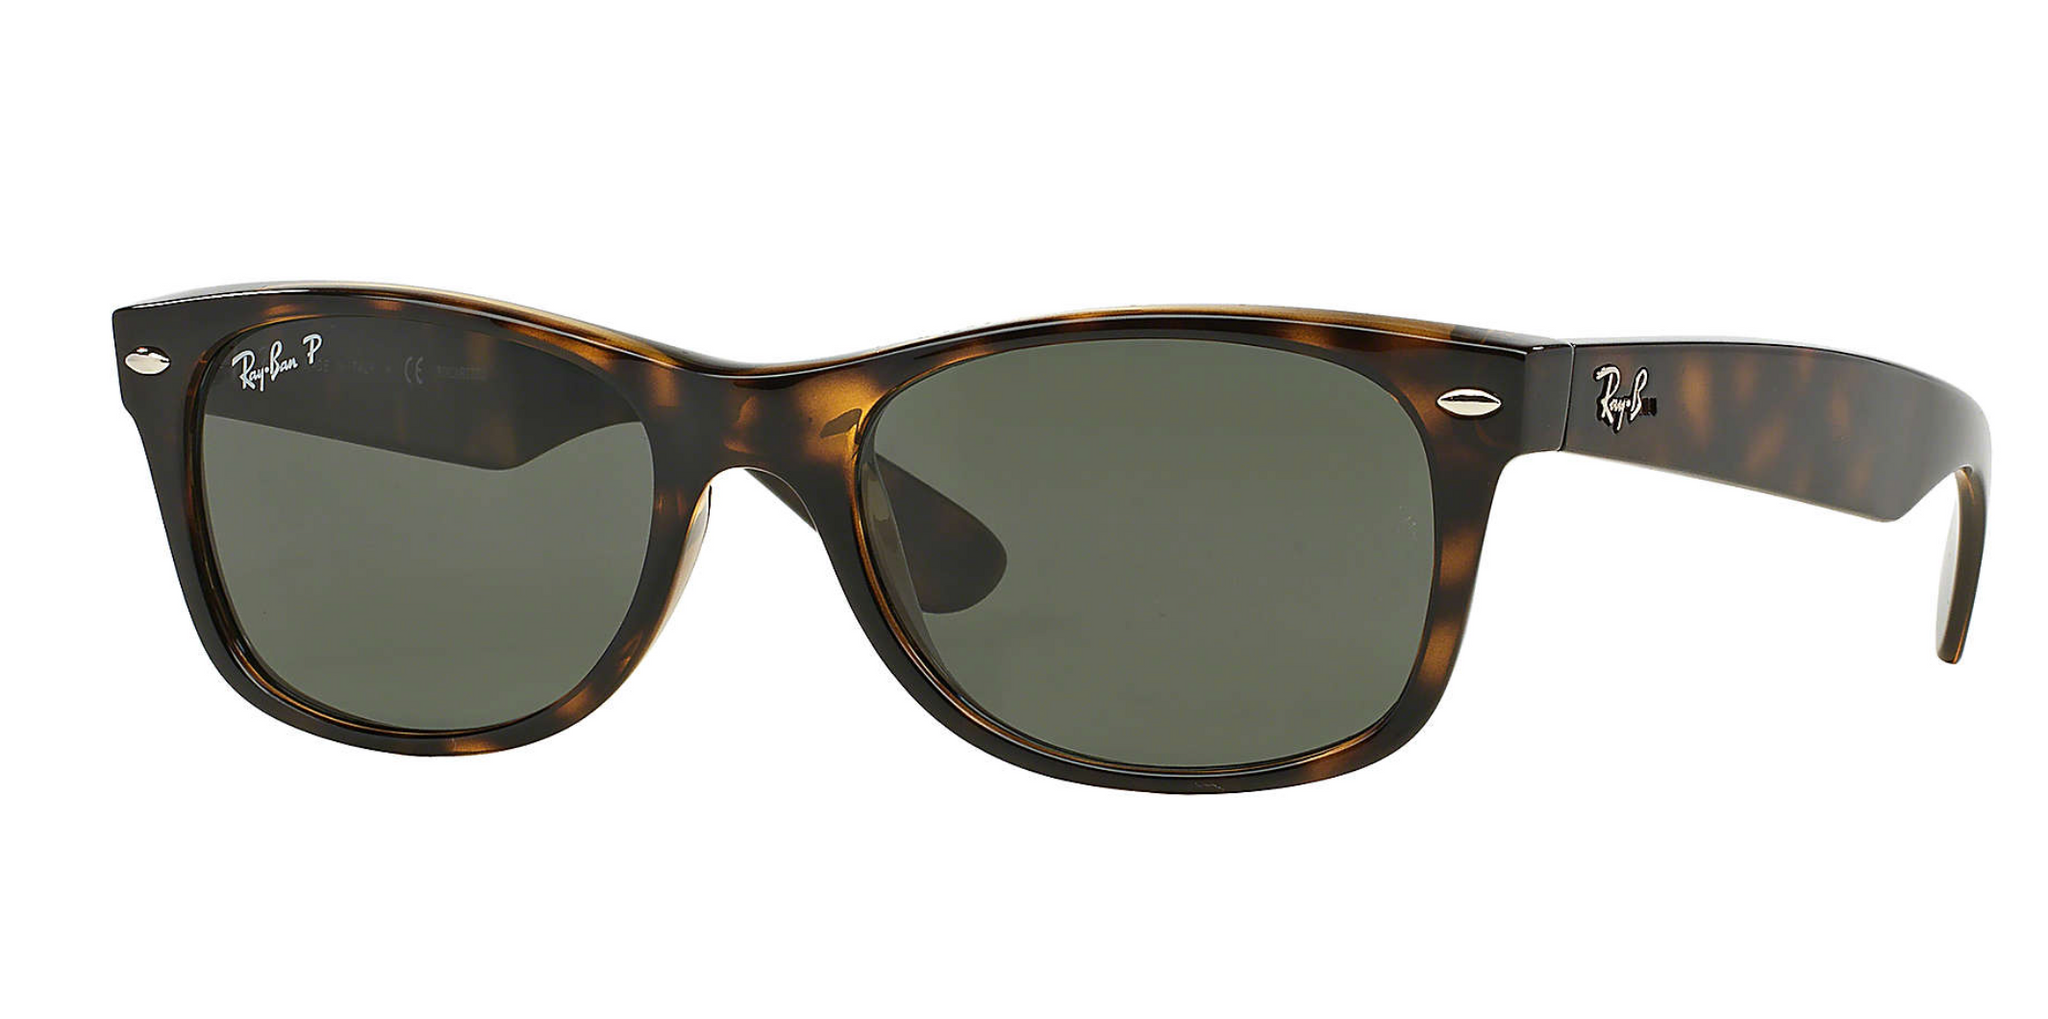 tortoise wayfarer sunglasses